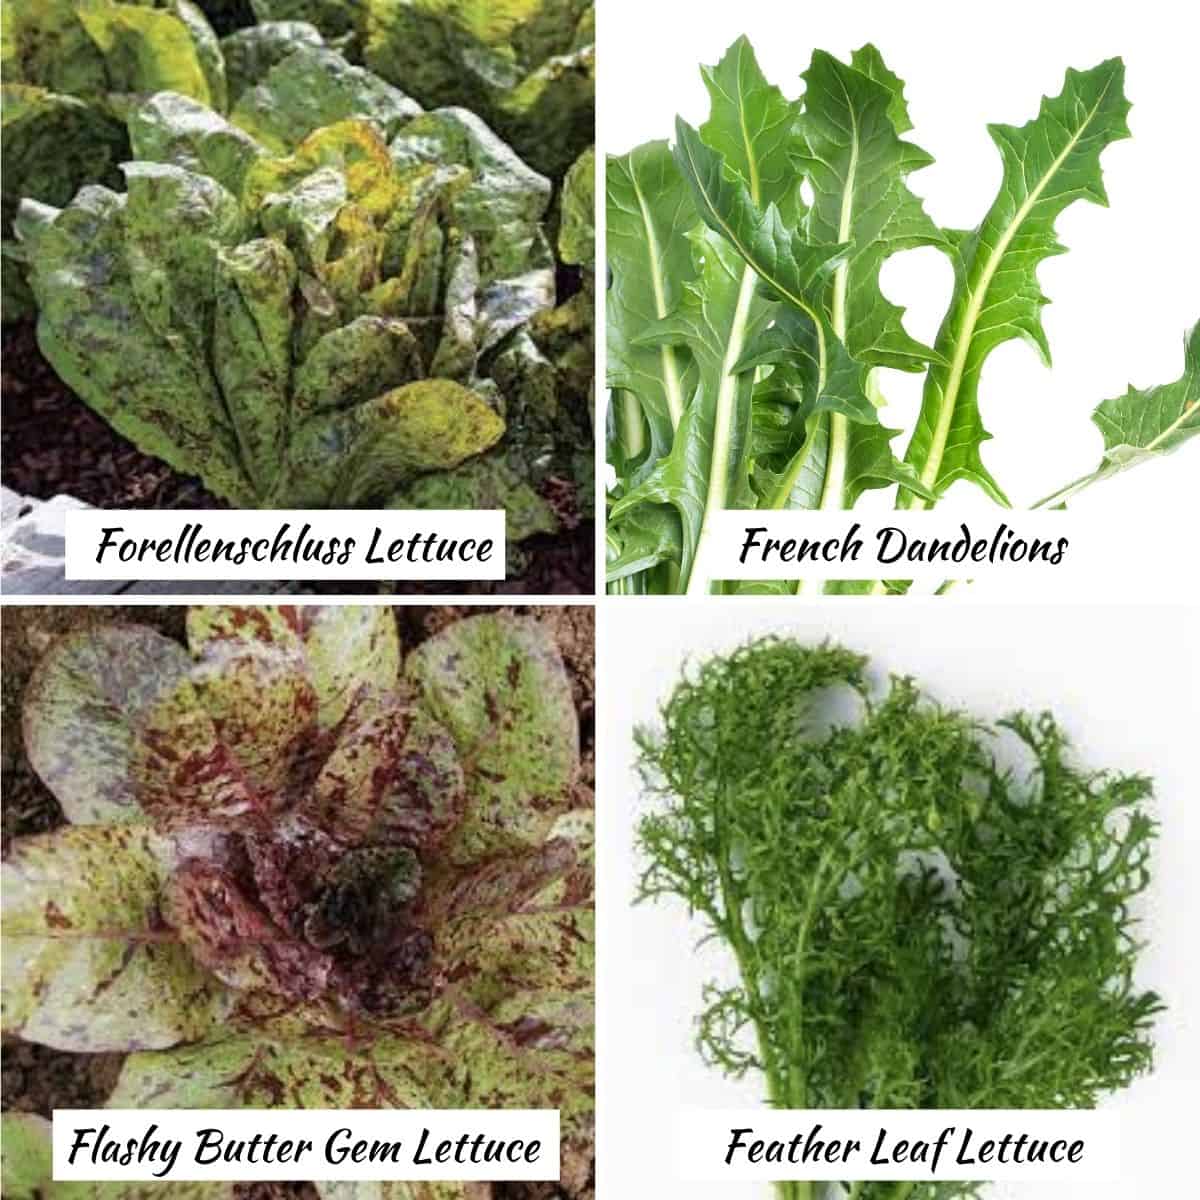 Vegetables that start with F-forellenschluss lettuce, french dandelions, flashy butter gem lettuce, feather leaf lettuce. 